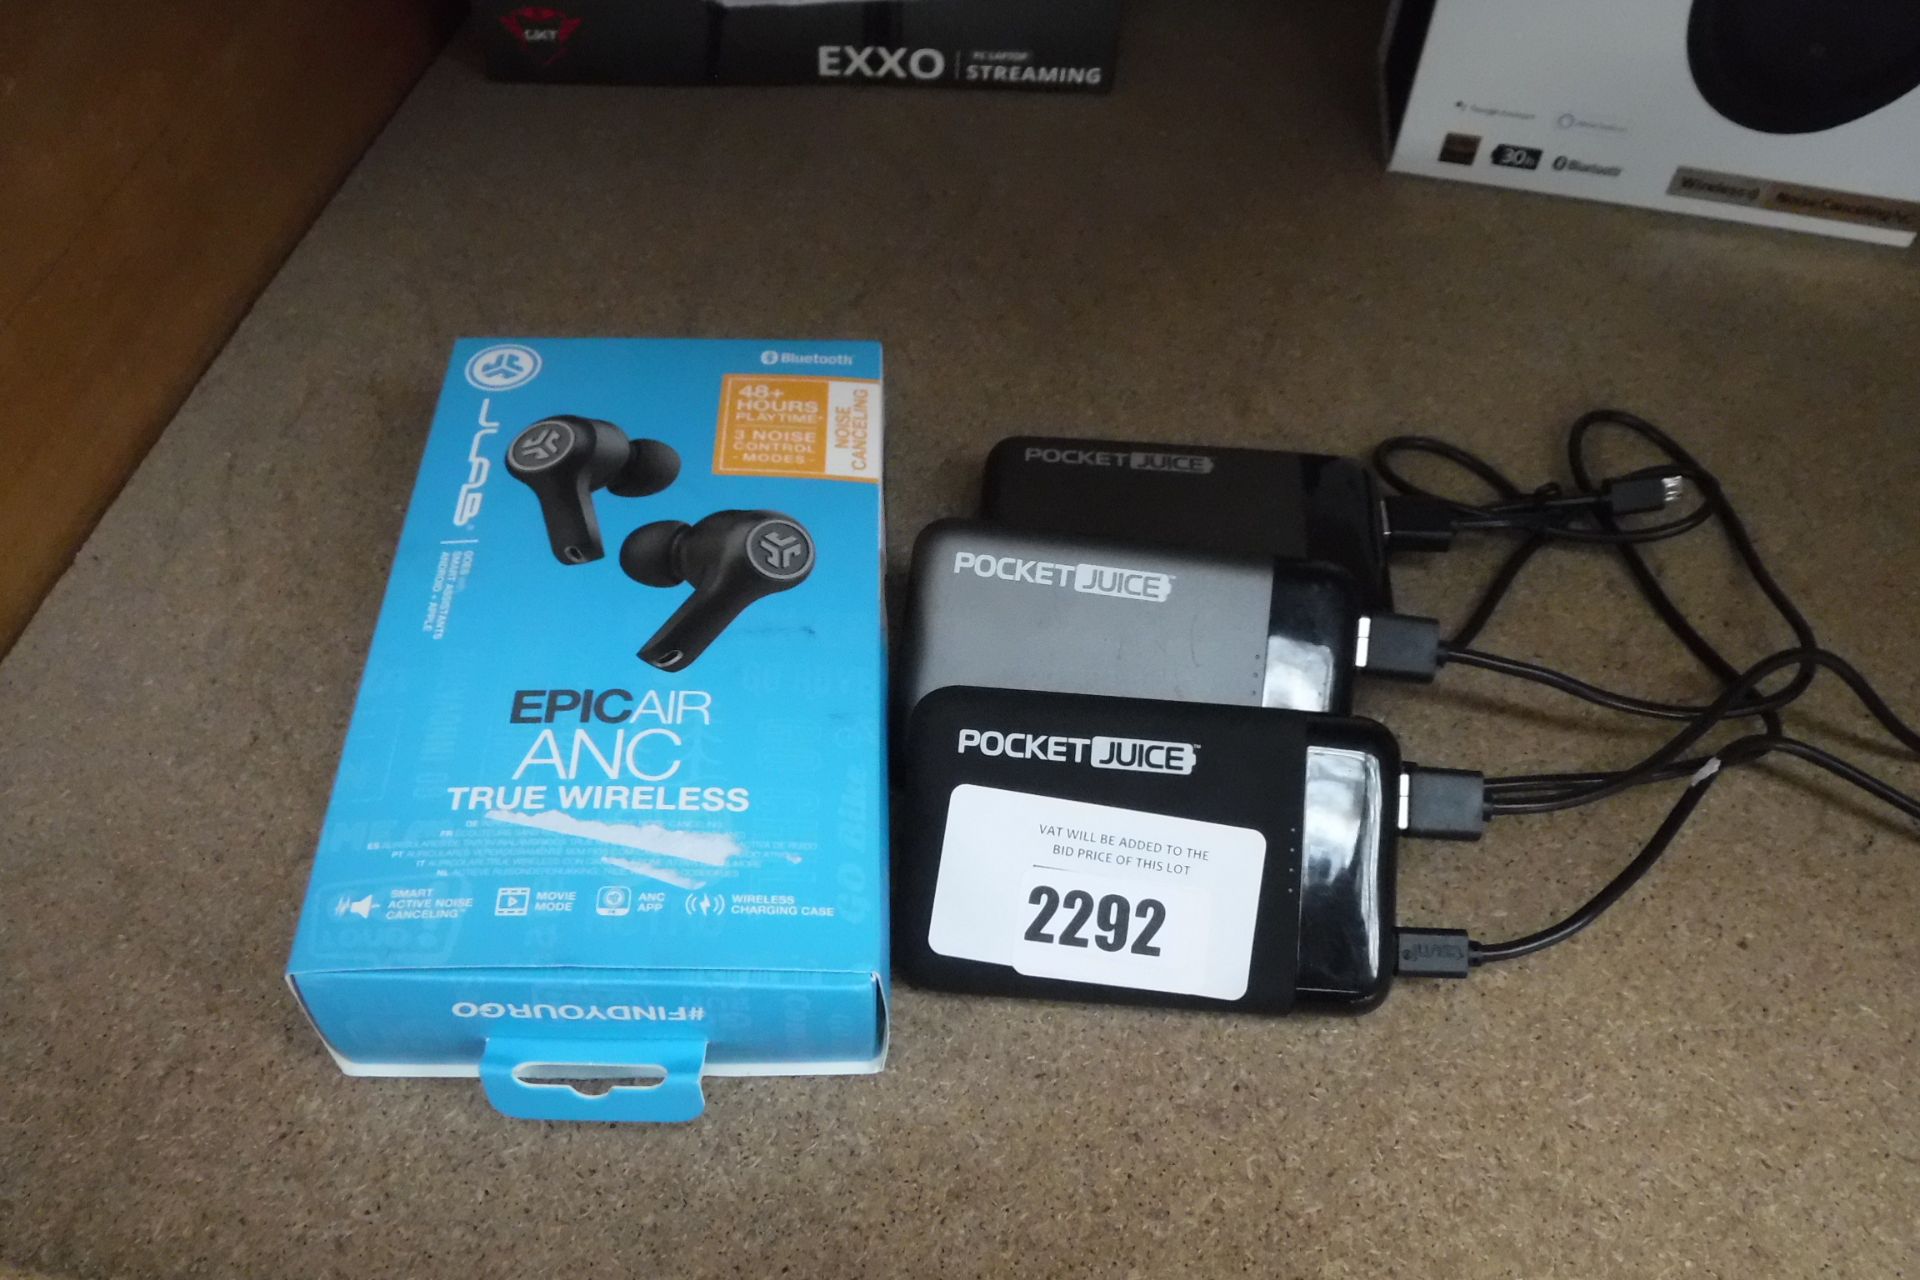 (2507,40) 3 power banks with set of wireless headphones